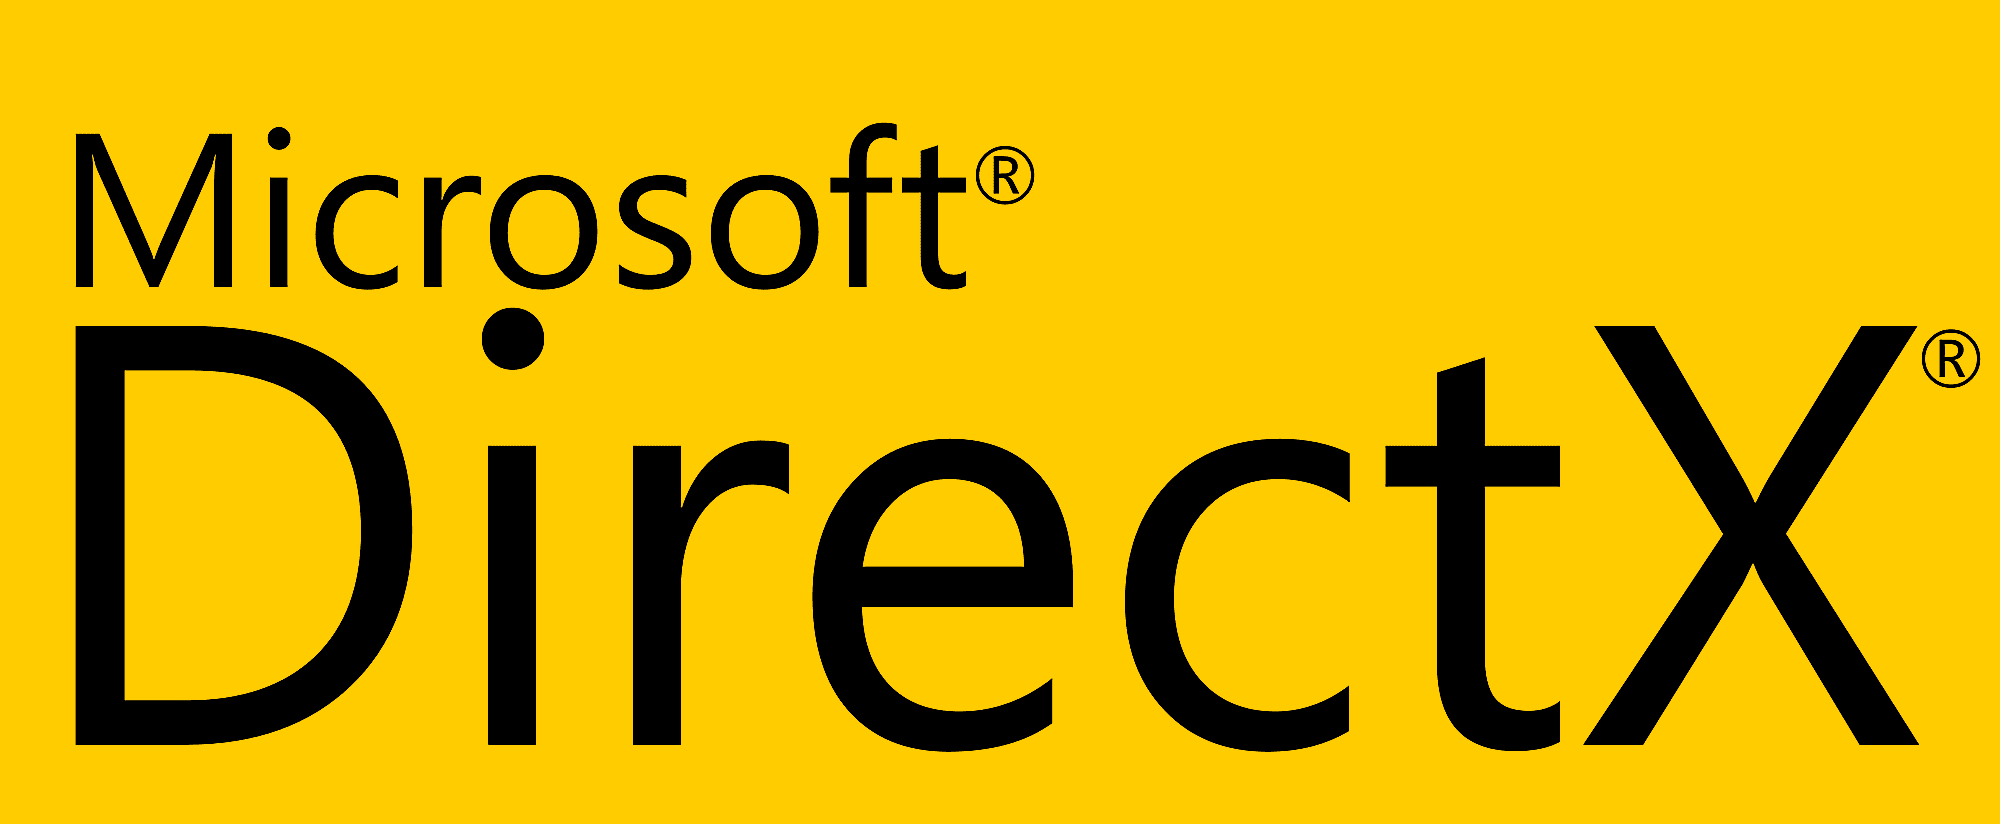 microsoft directx 9.0 sdk